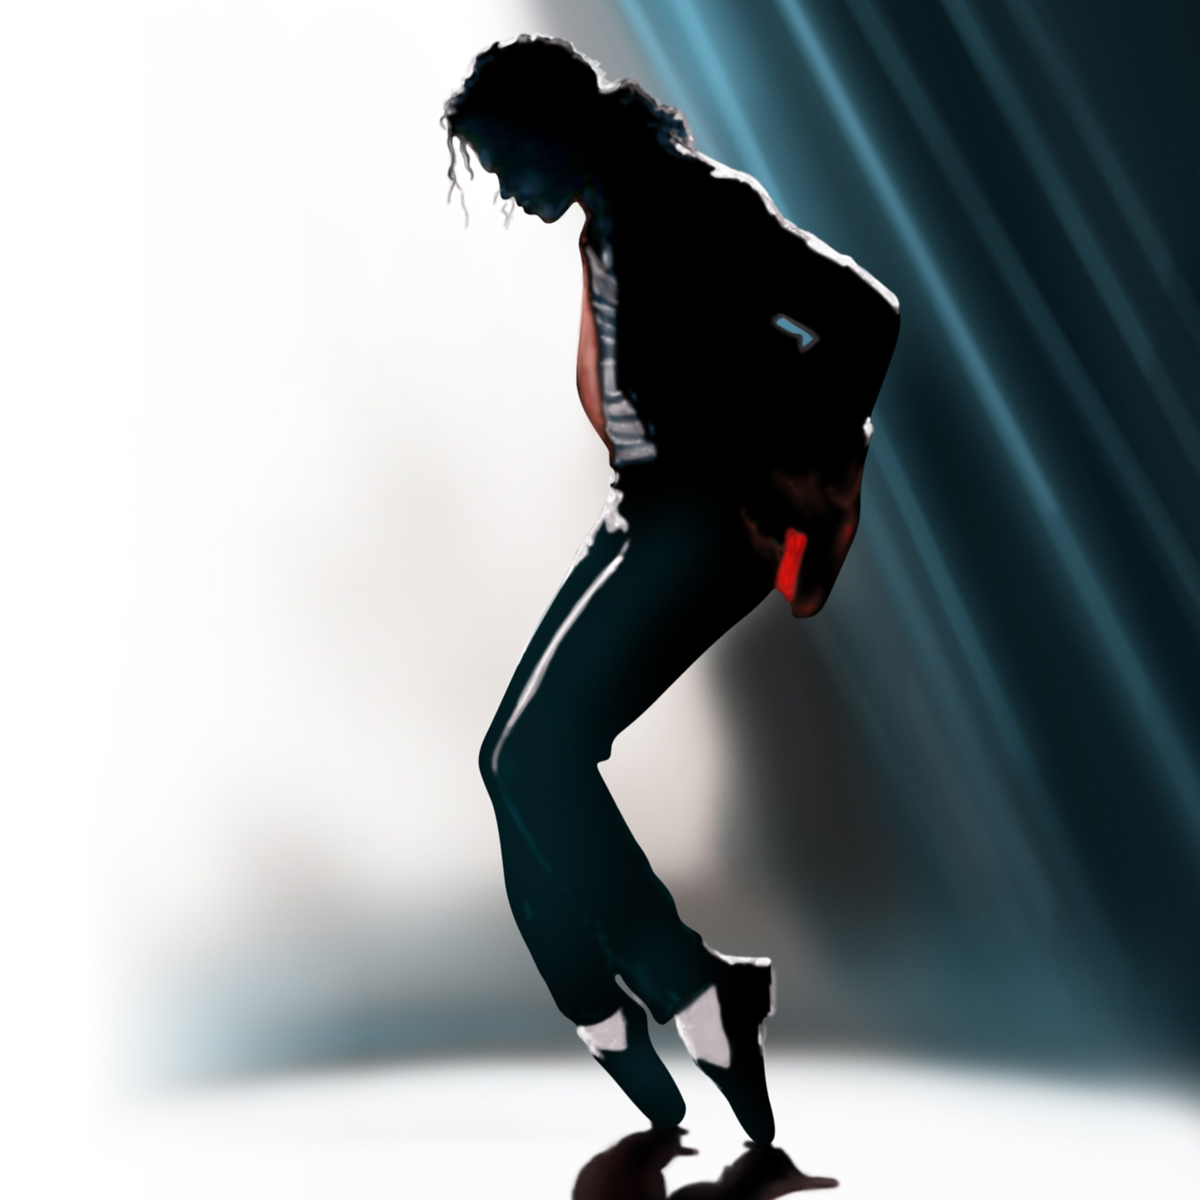 Michael jackson dance